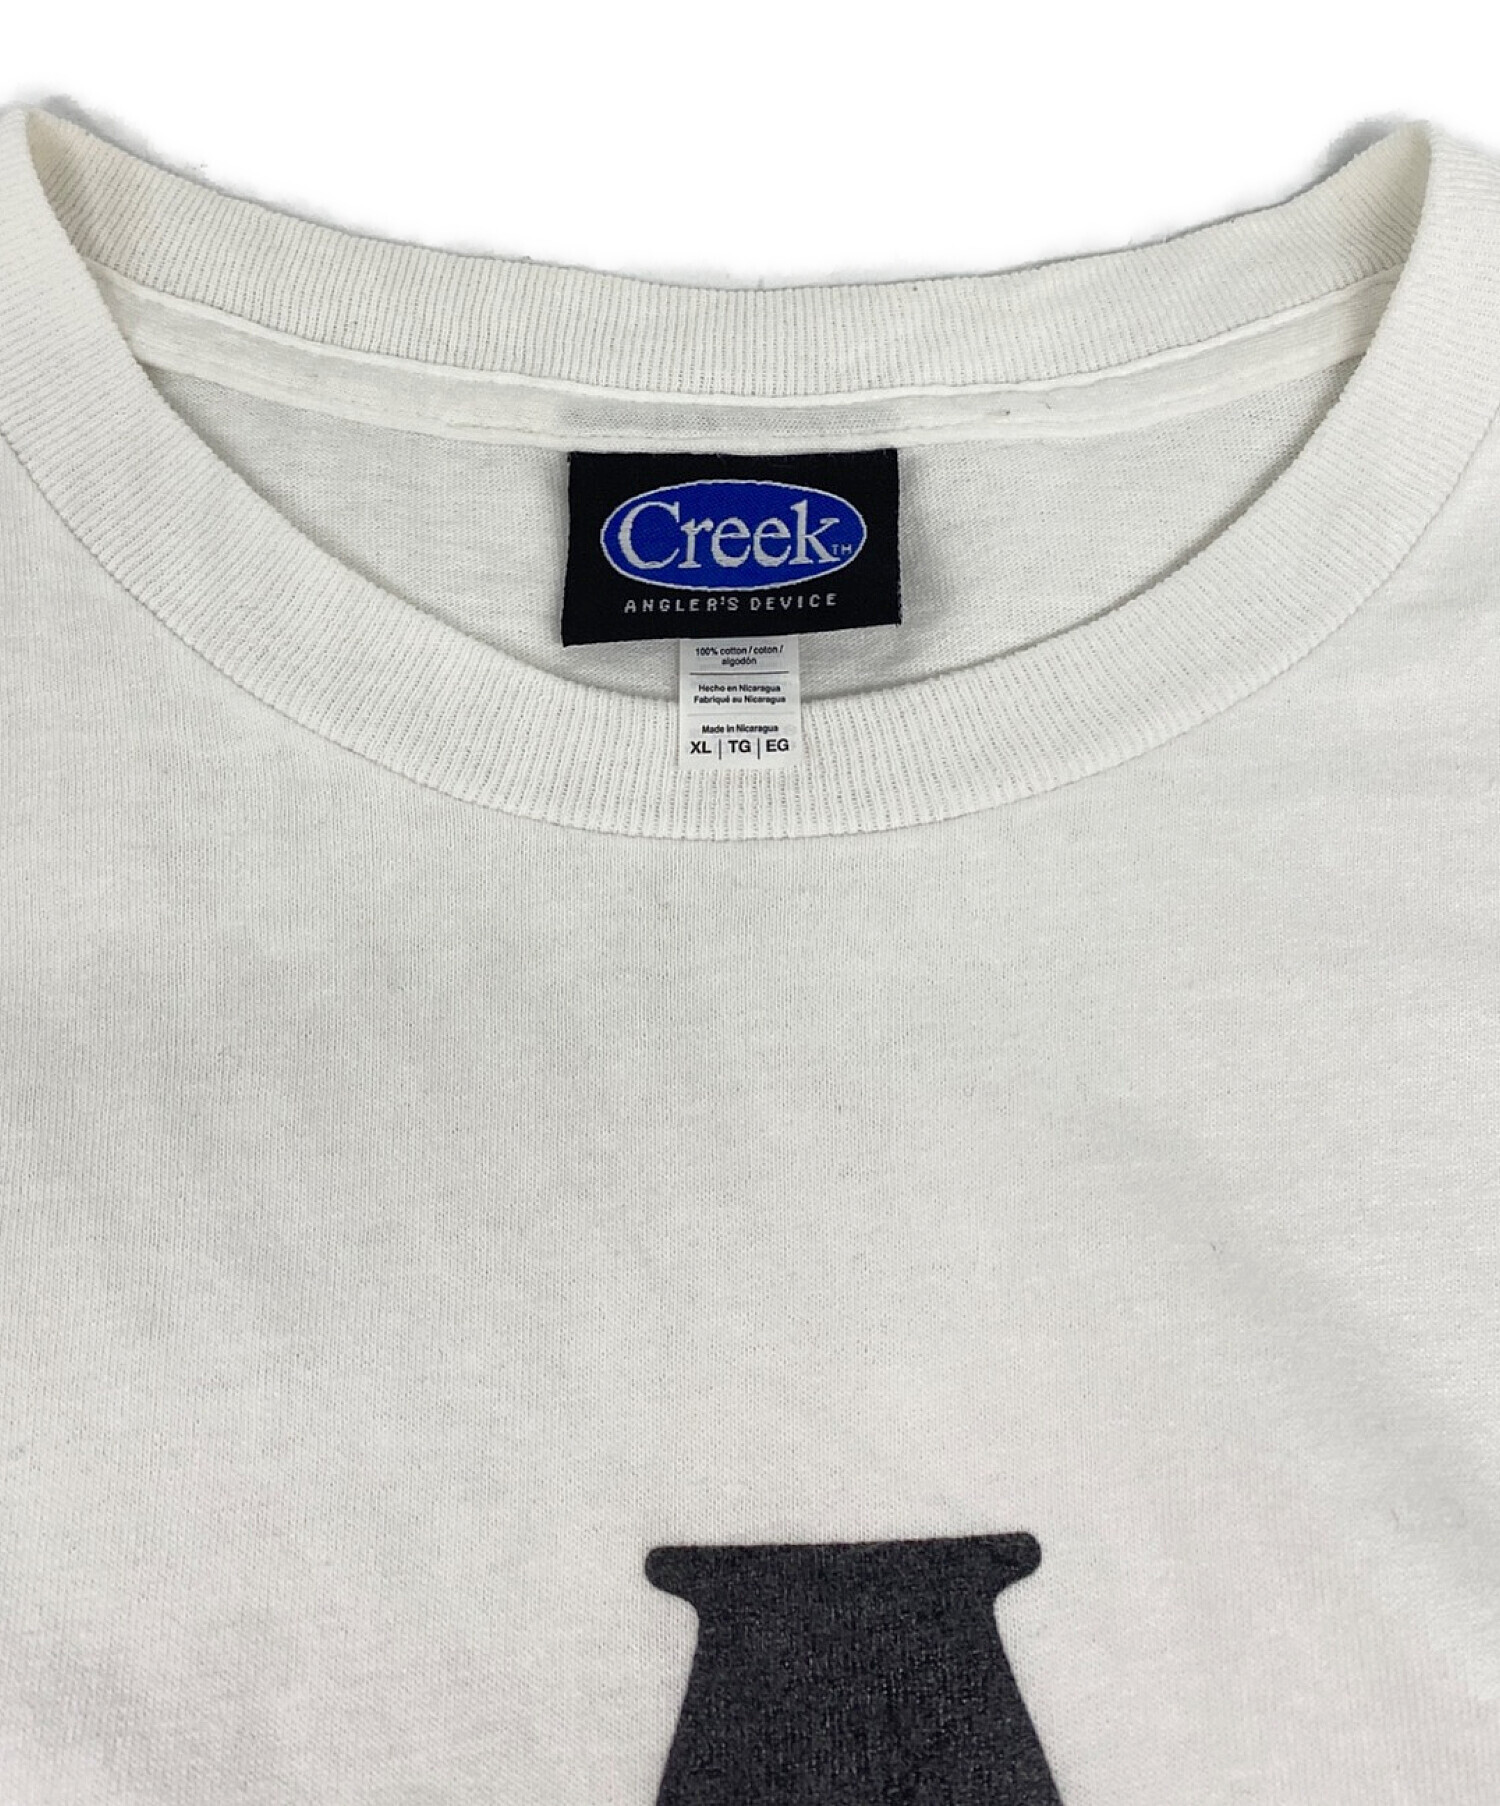 creek angler's device Tシャツ - トップス